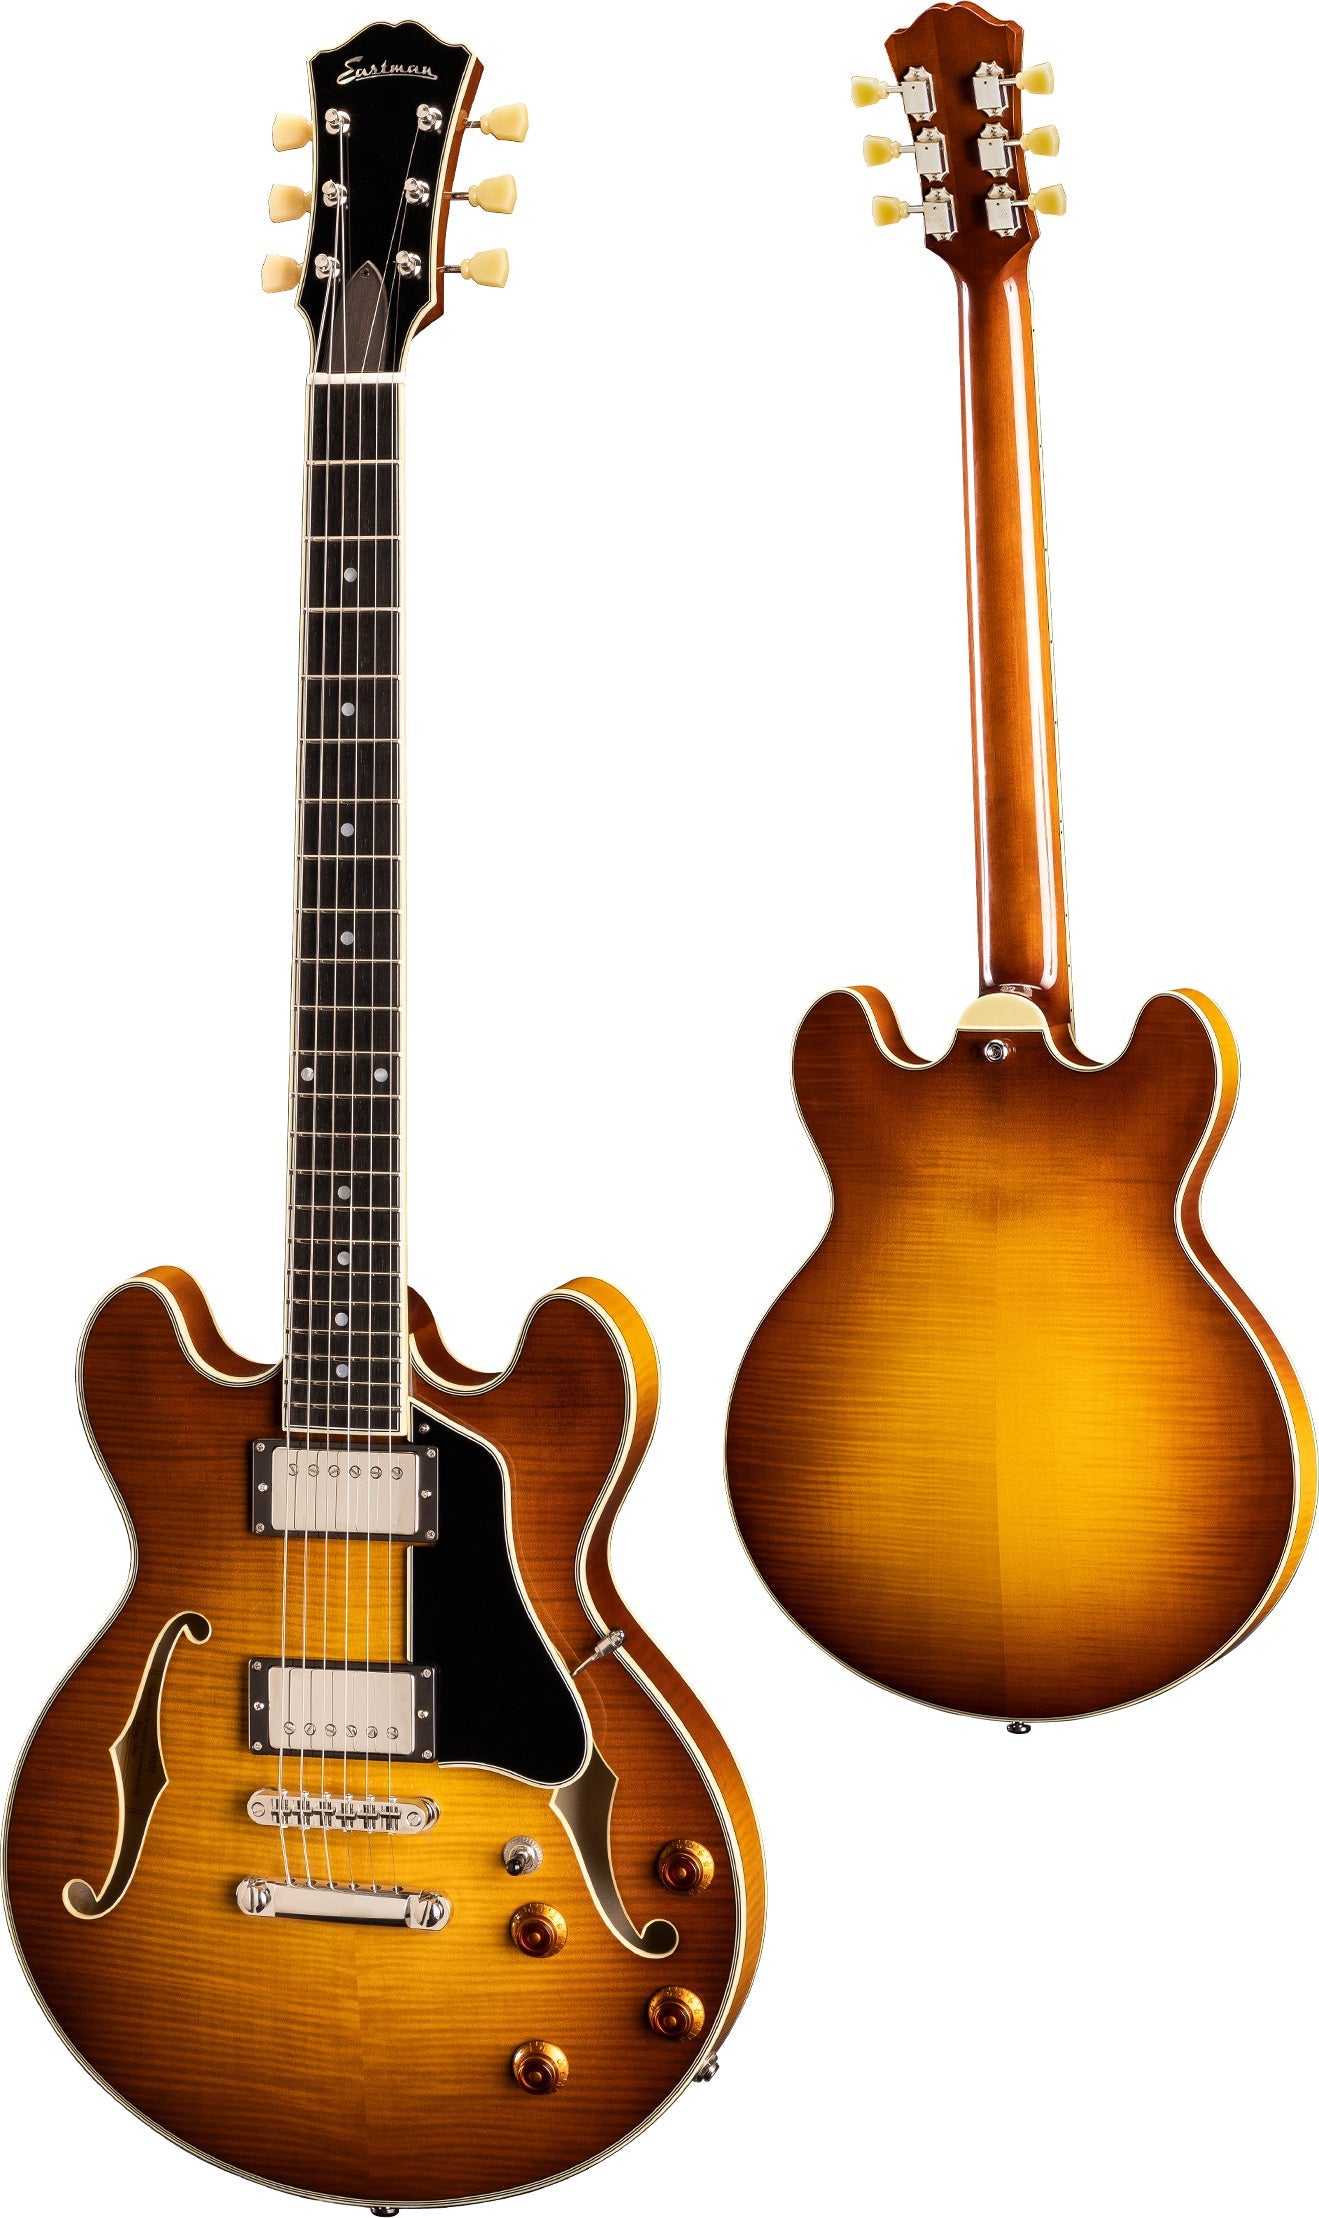 Eastman T484 Goldburst, Electric Guitar for sale at Richards Guitars.